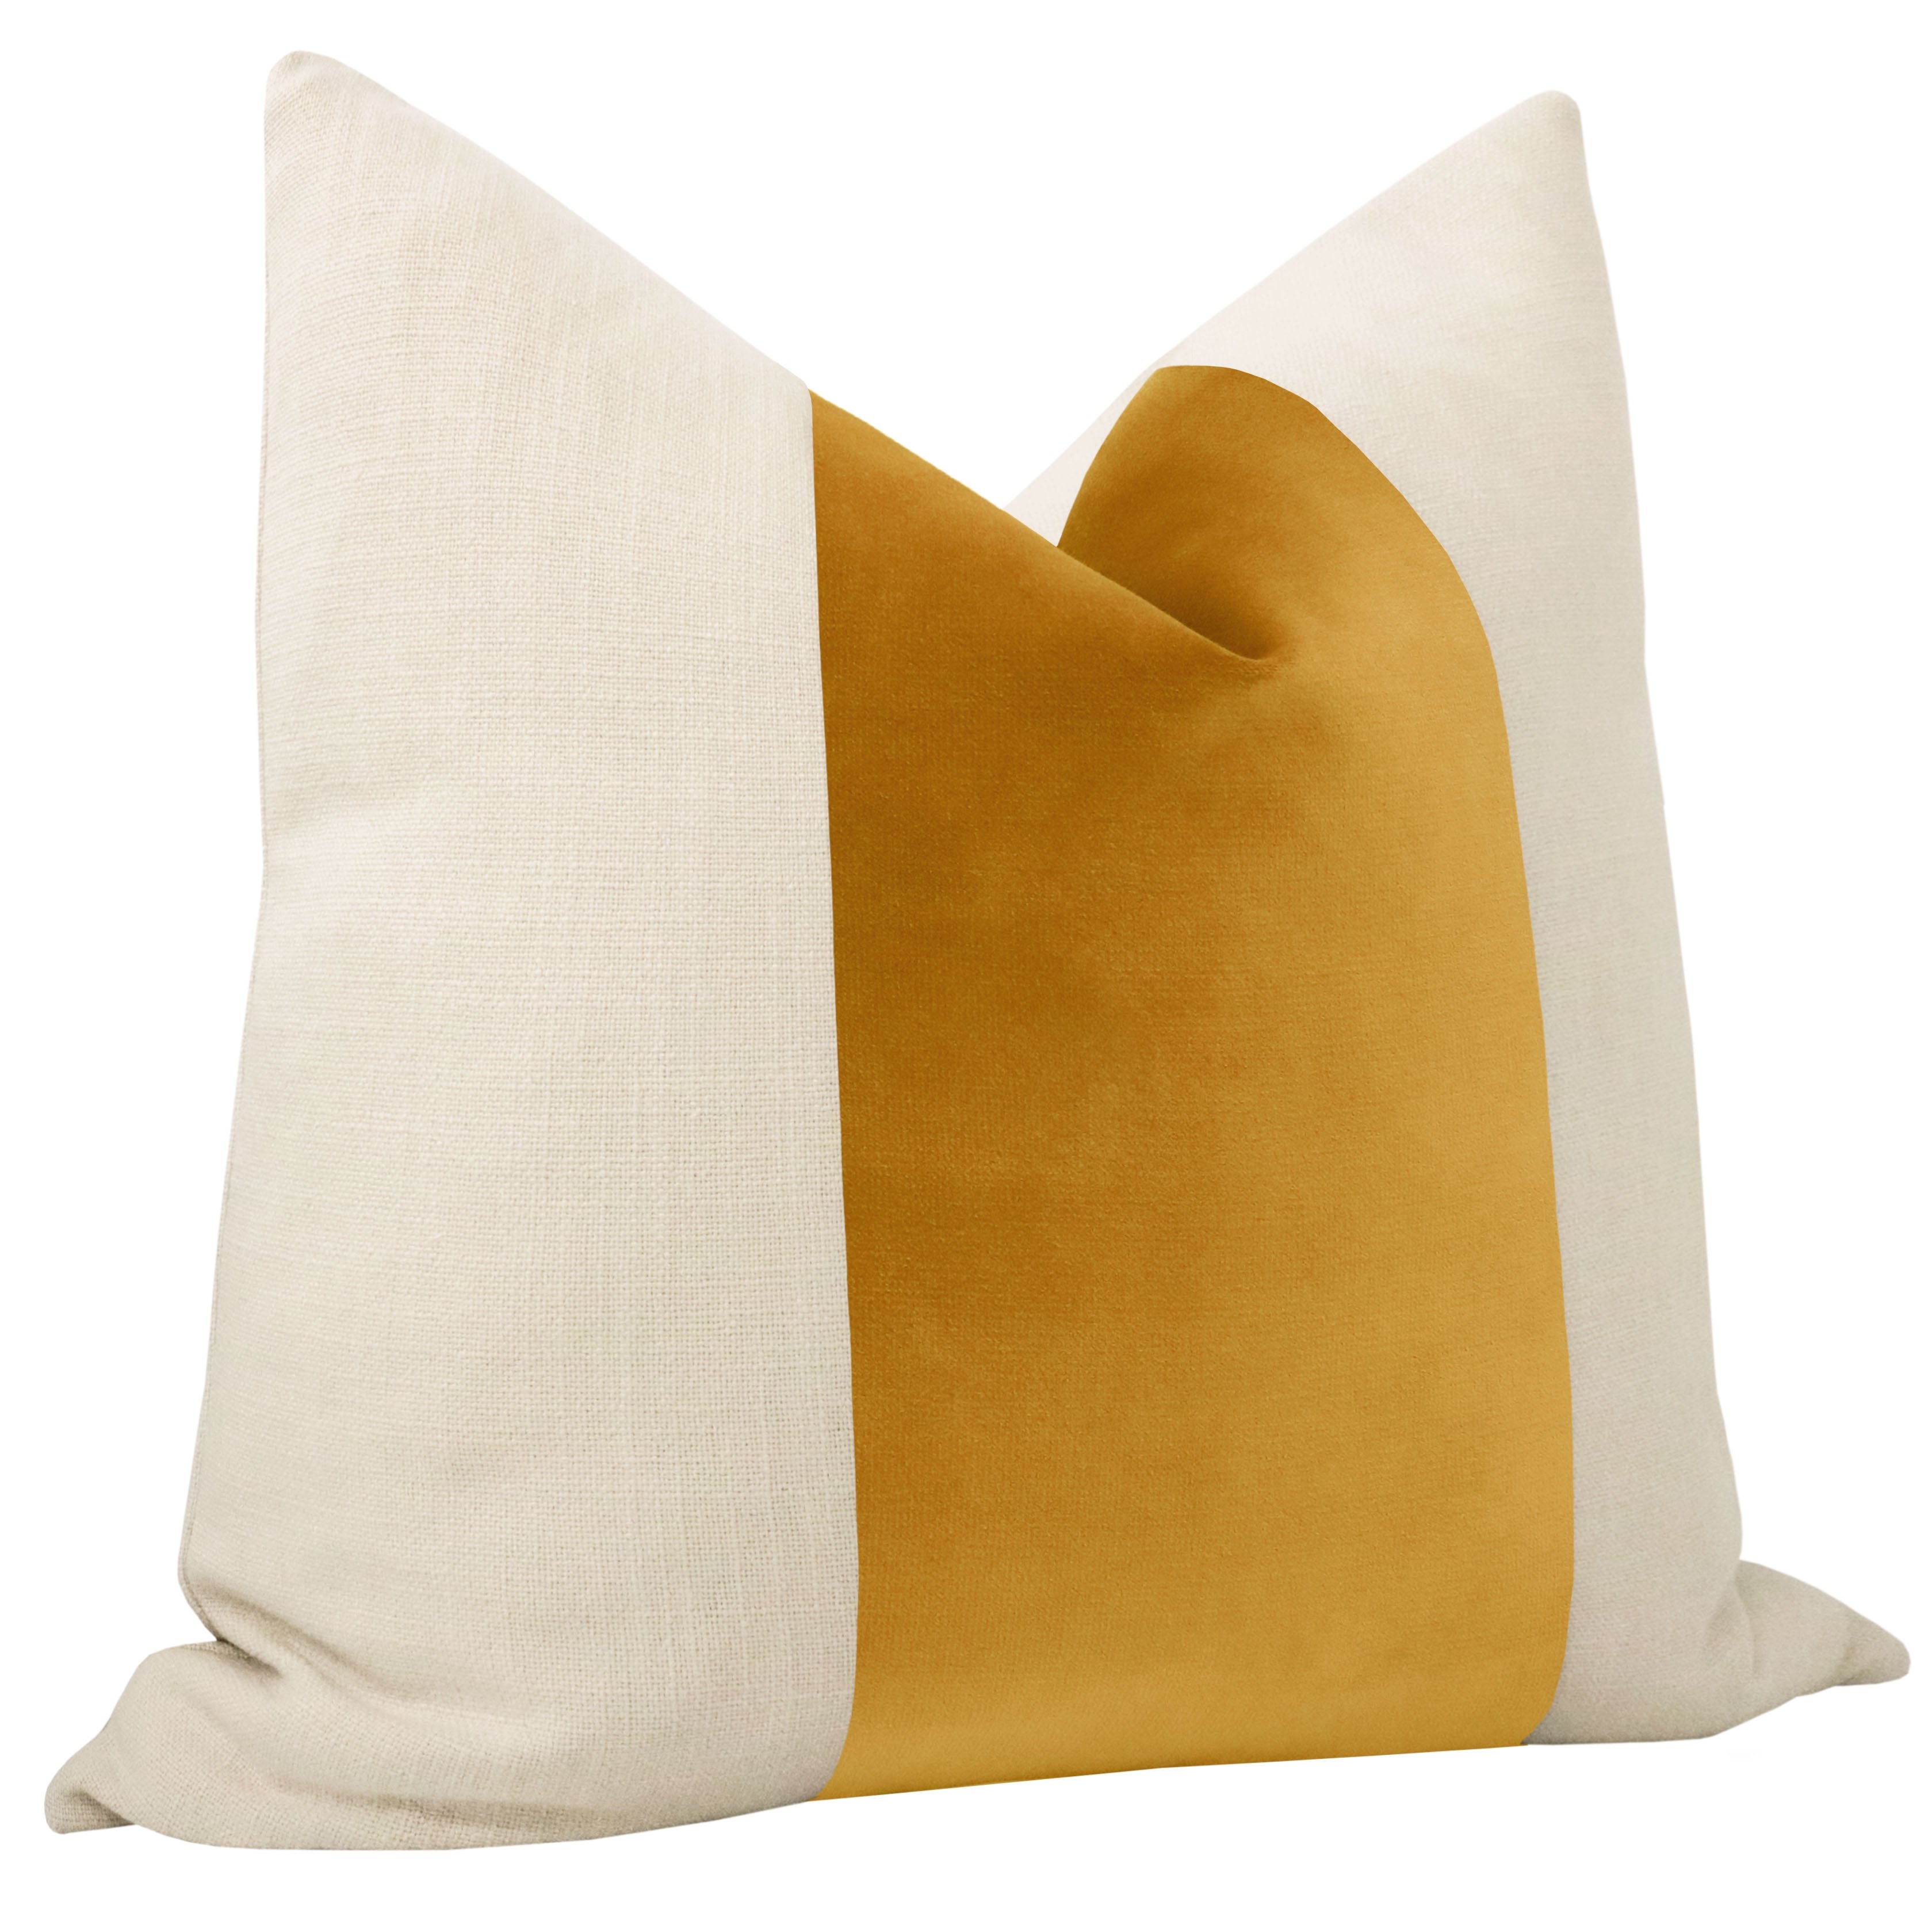 Panel Sonoma Velvet Pillow Cover, Curry, 18" x 18" - Image 1